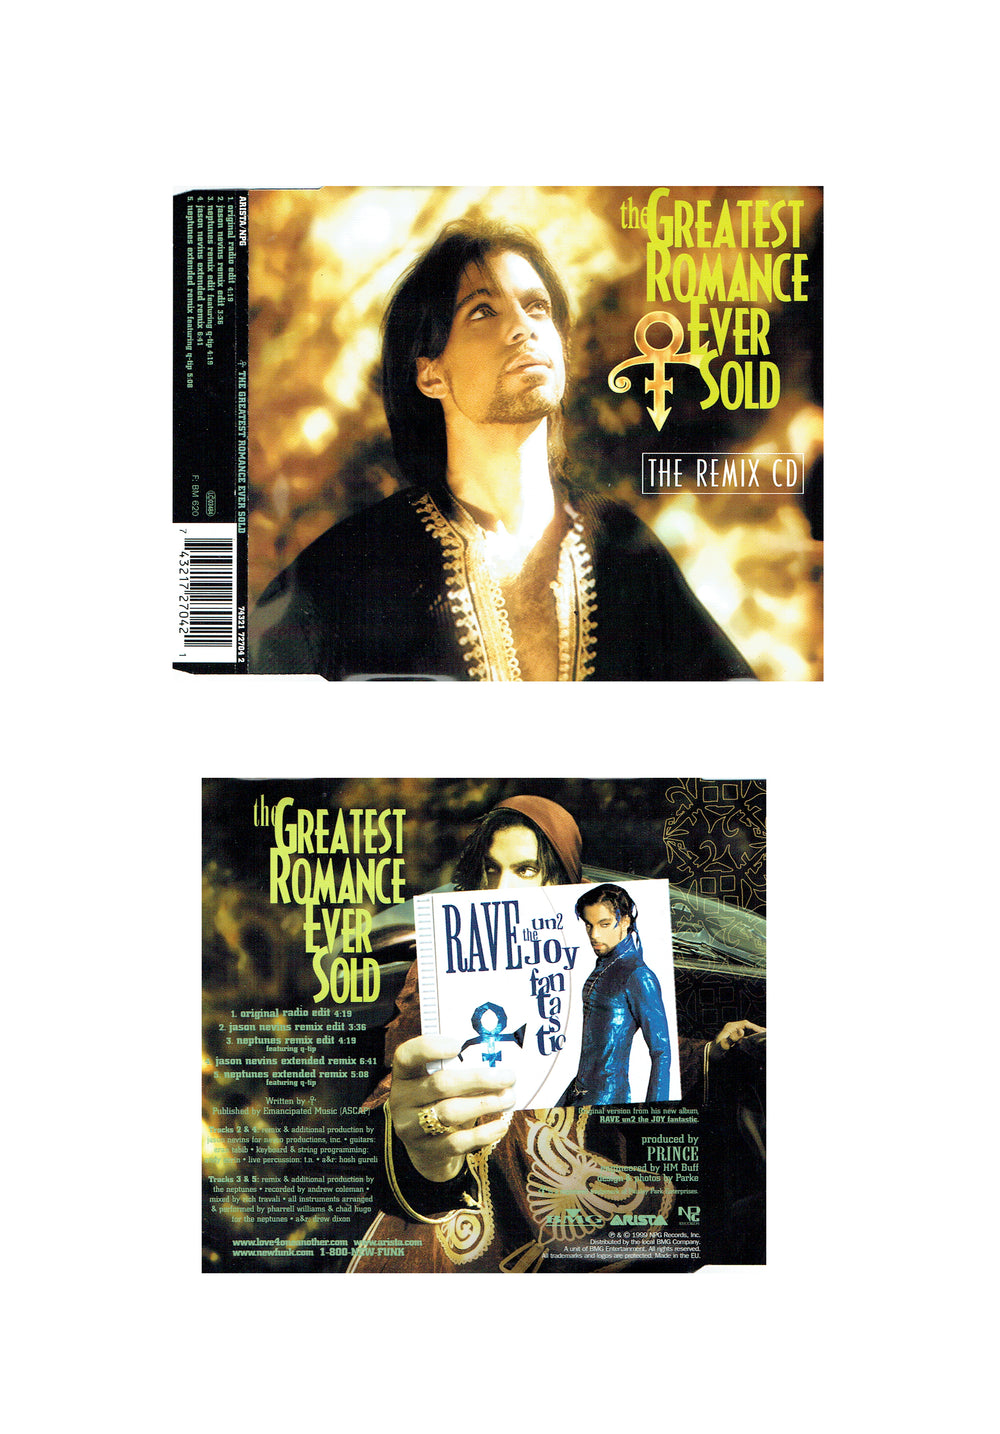 Prince The Greatest Romance Remix CD Single EU 5 Inch CD Single 1990 5 Tracks